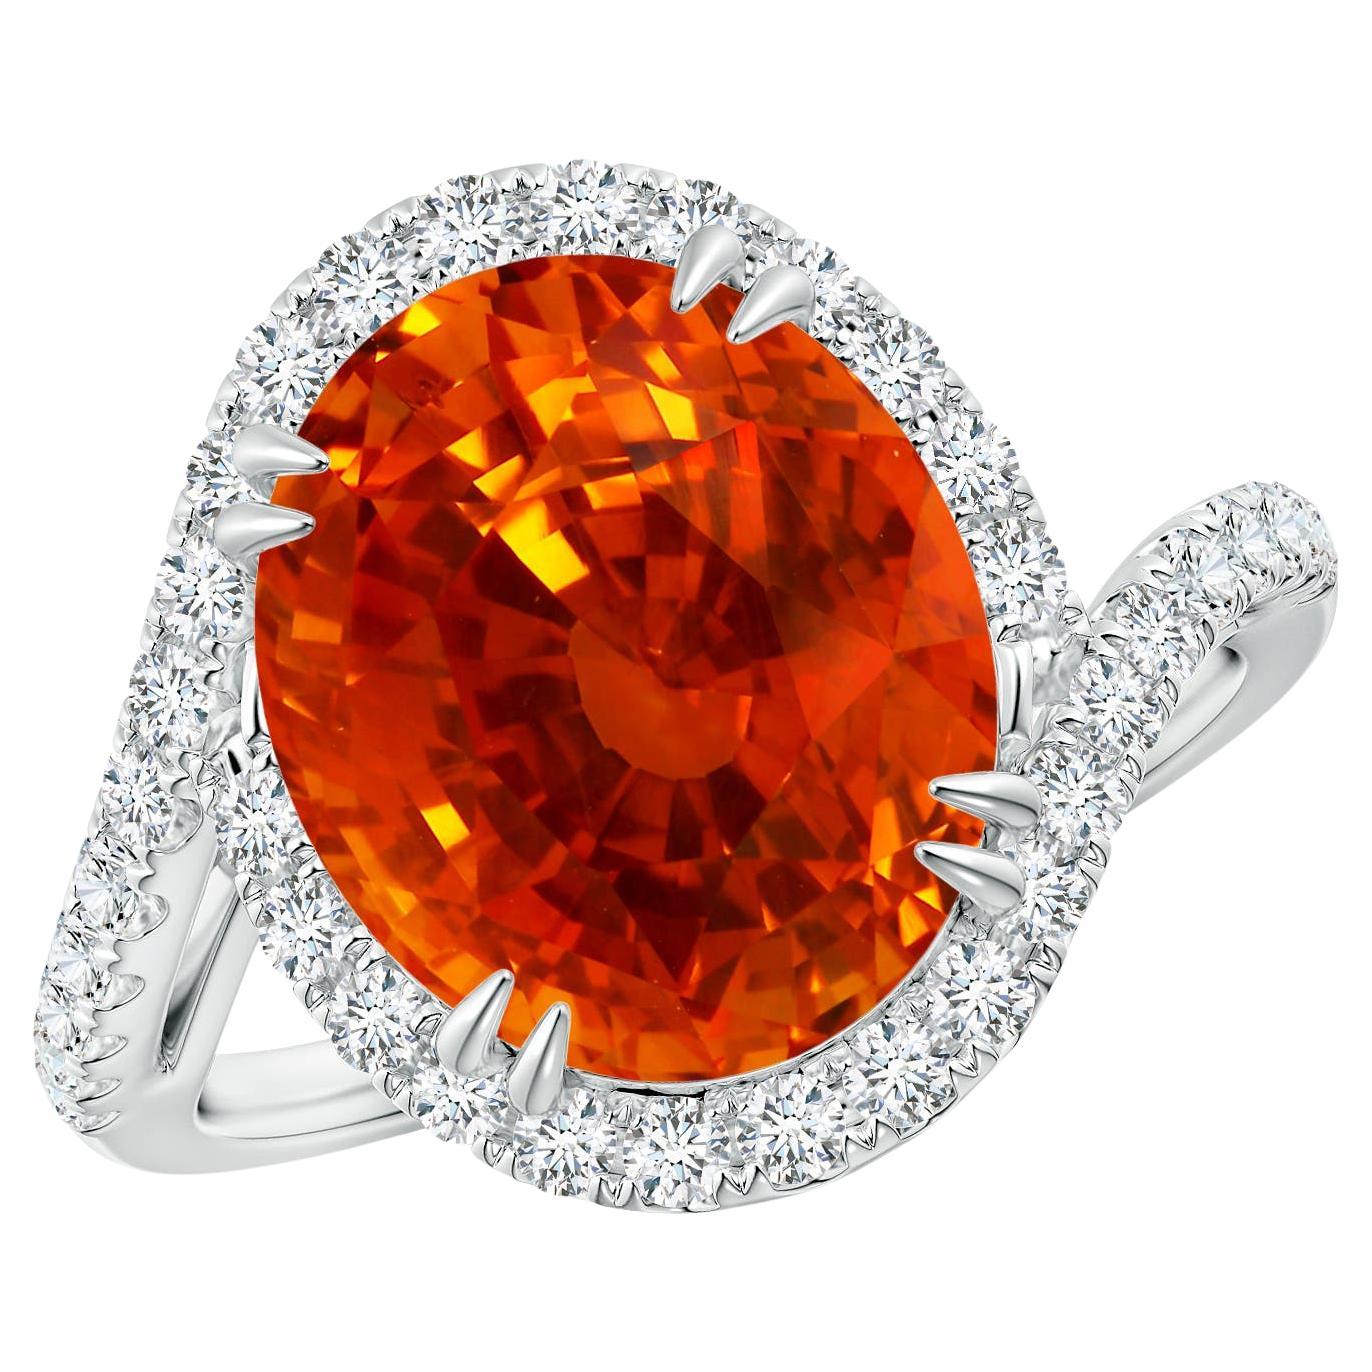 Angara Bague en platine avec saphir orange naturel certifié GIA et diamants